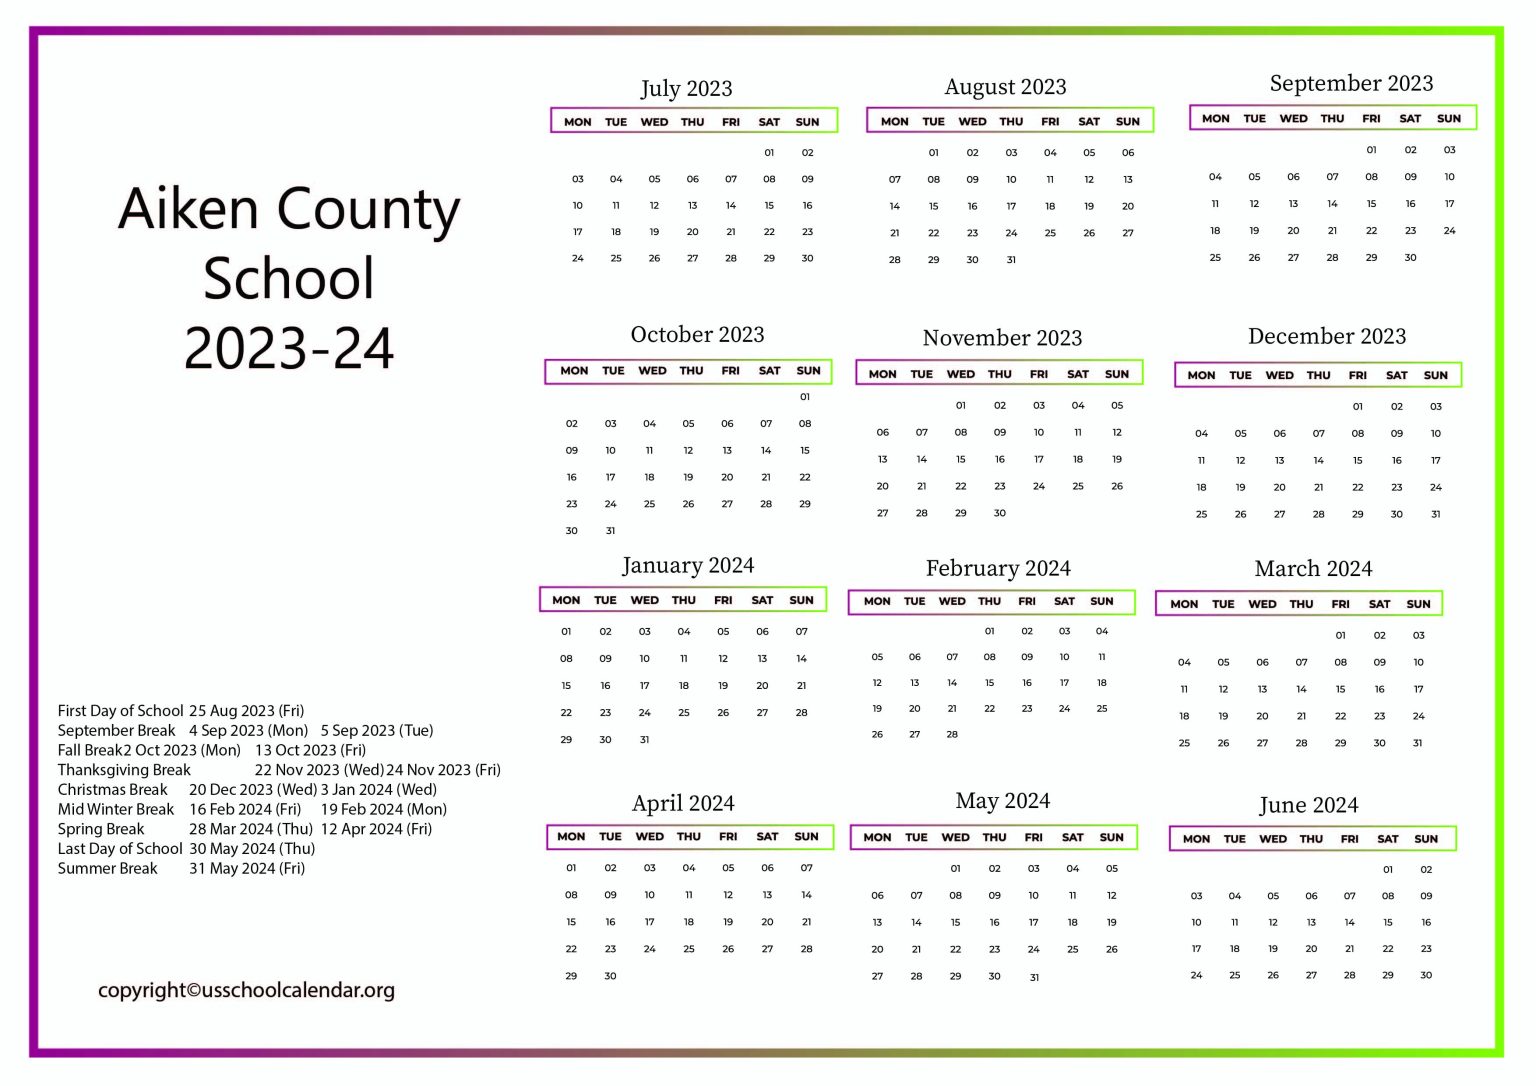 Aiken County School Calendar with Holidays 2023 2024